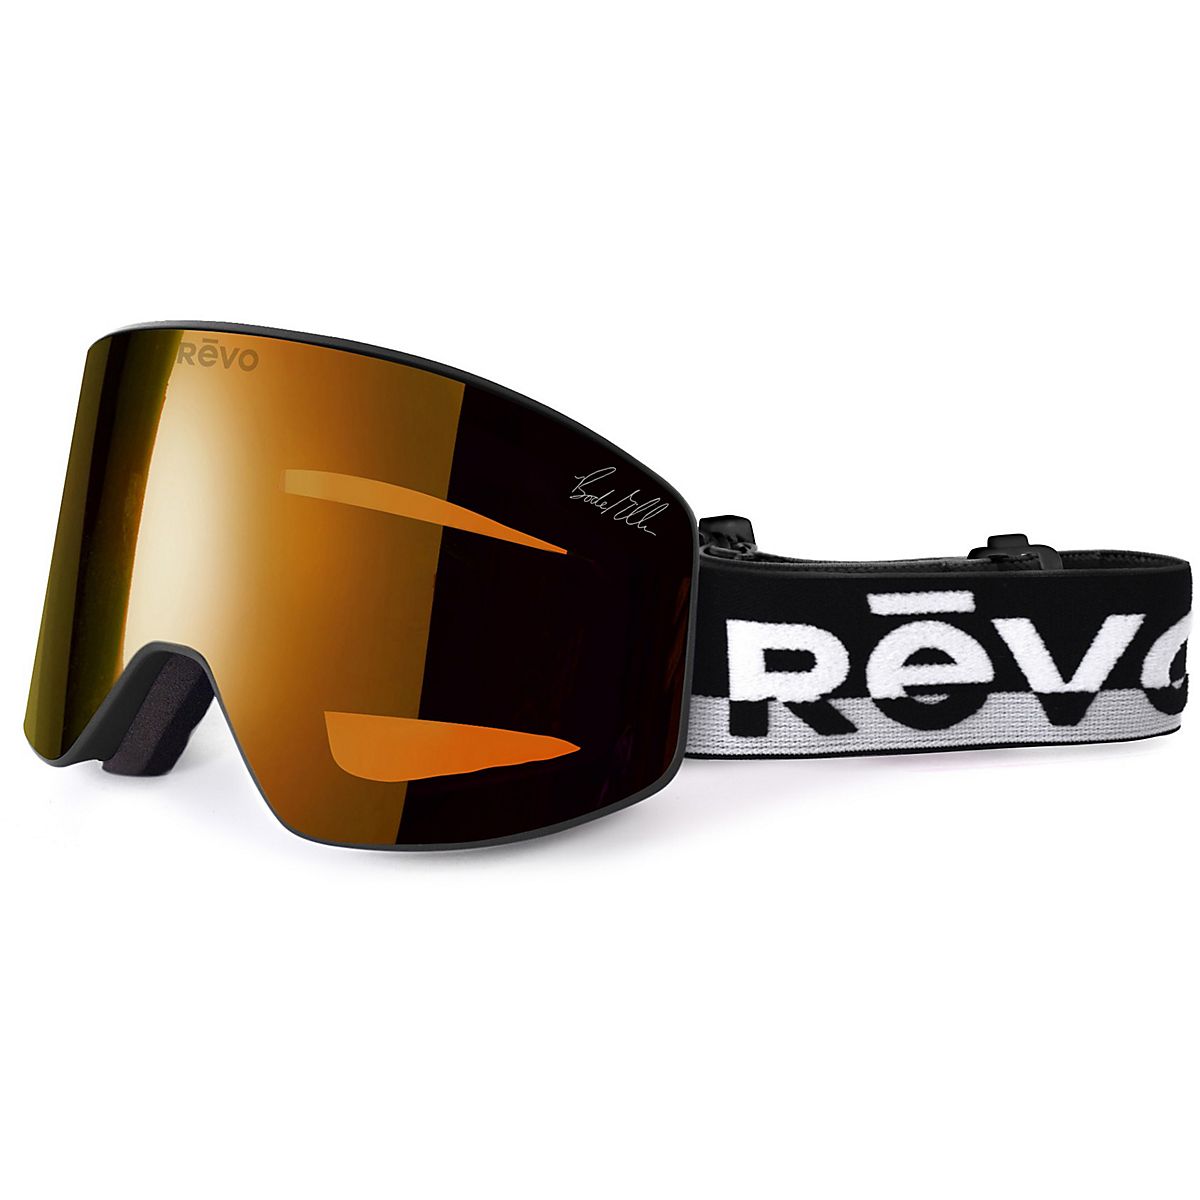 Revo Bode Miller No 3 Ski Goggles | Free Shipping at Academy